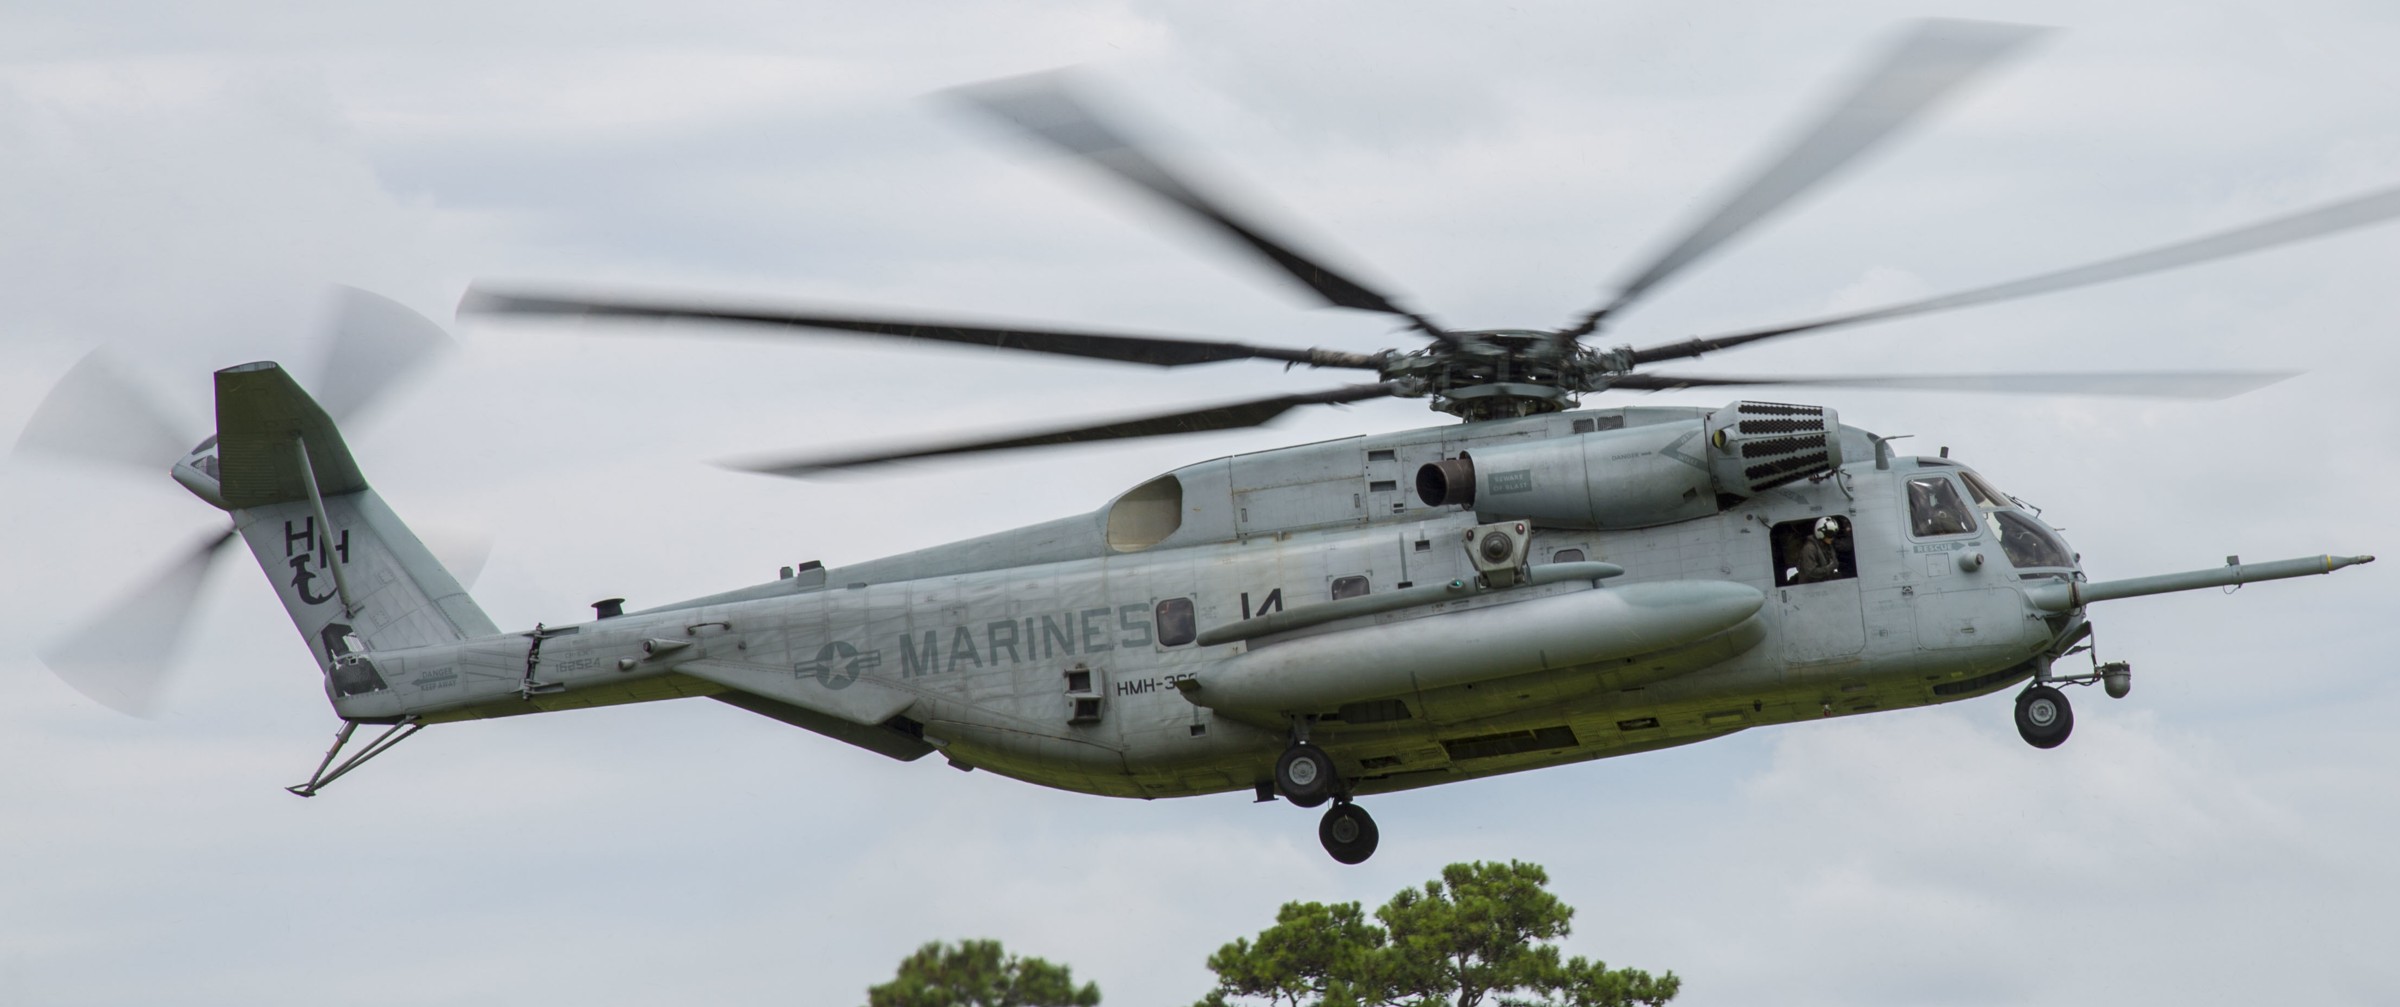 hmh-366 hammerheads marine heavy helicopter squadron usmc sikorsky ch-53e super stallion 74